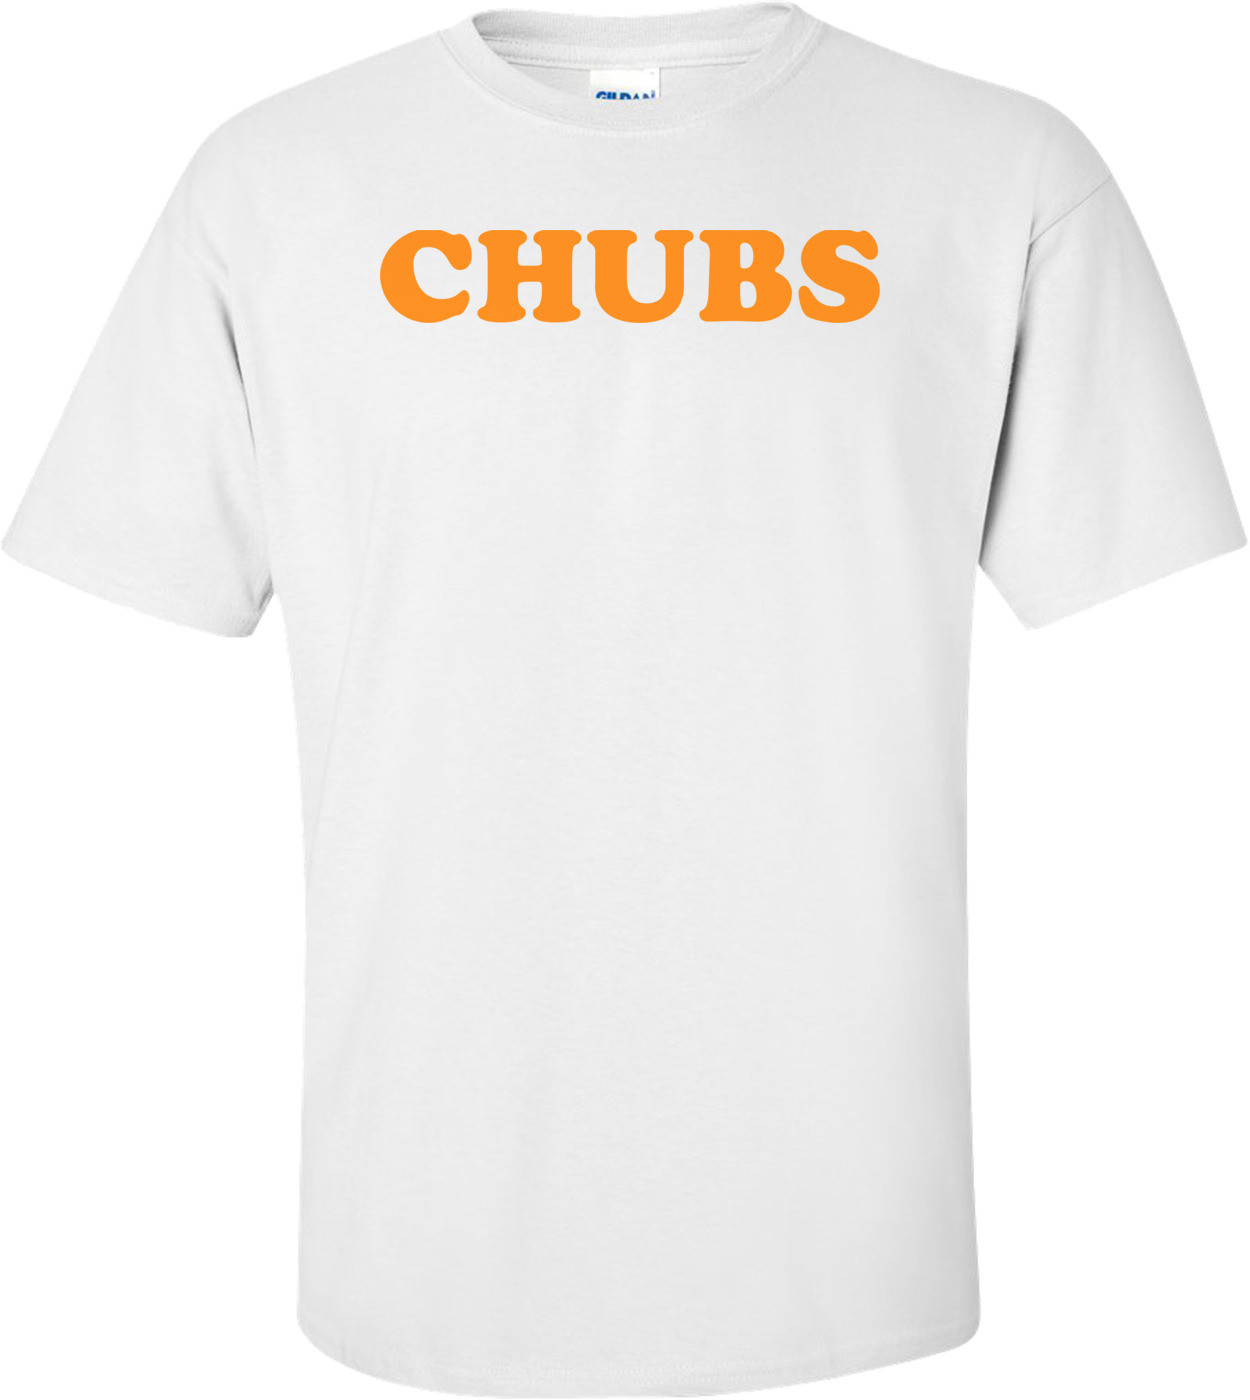 CHUBS Shirt